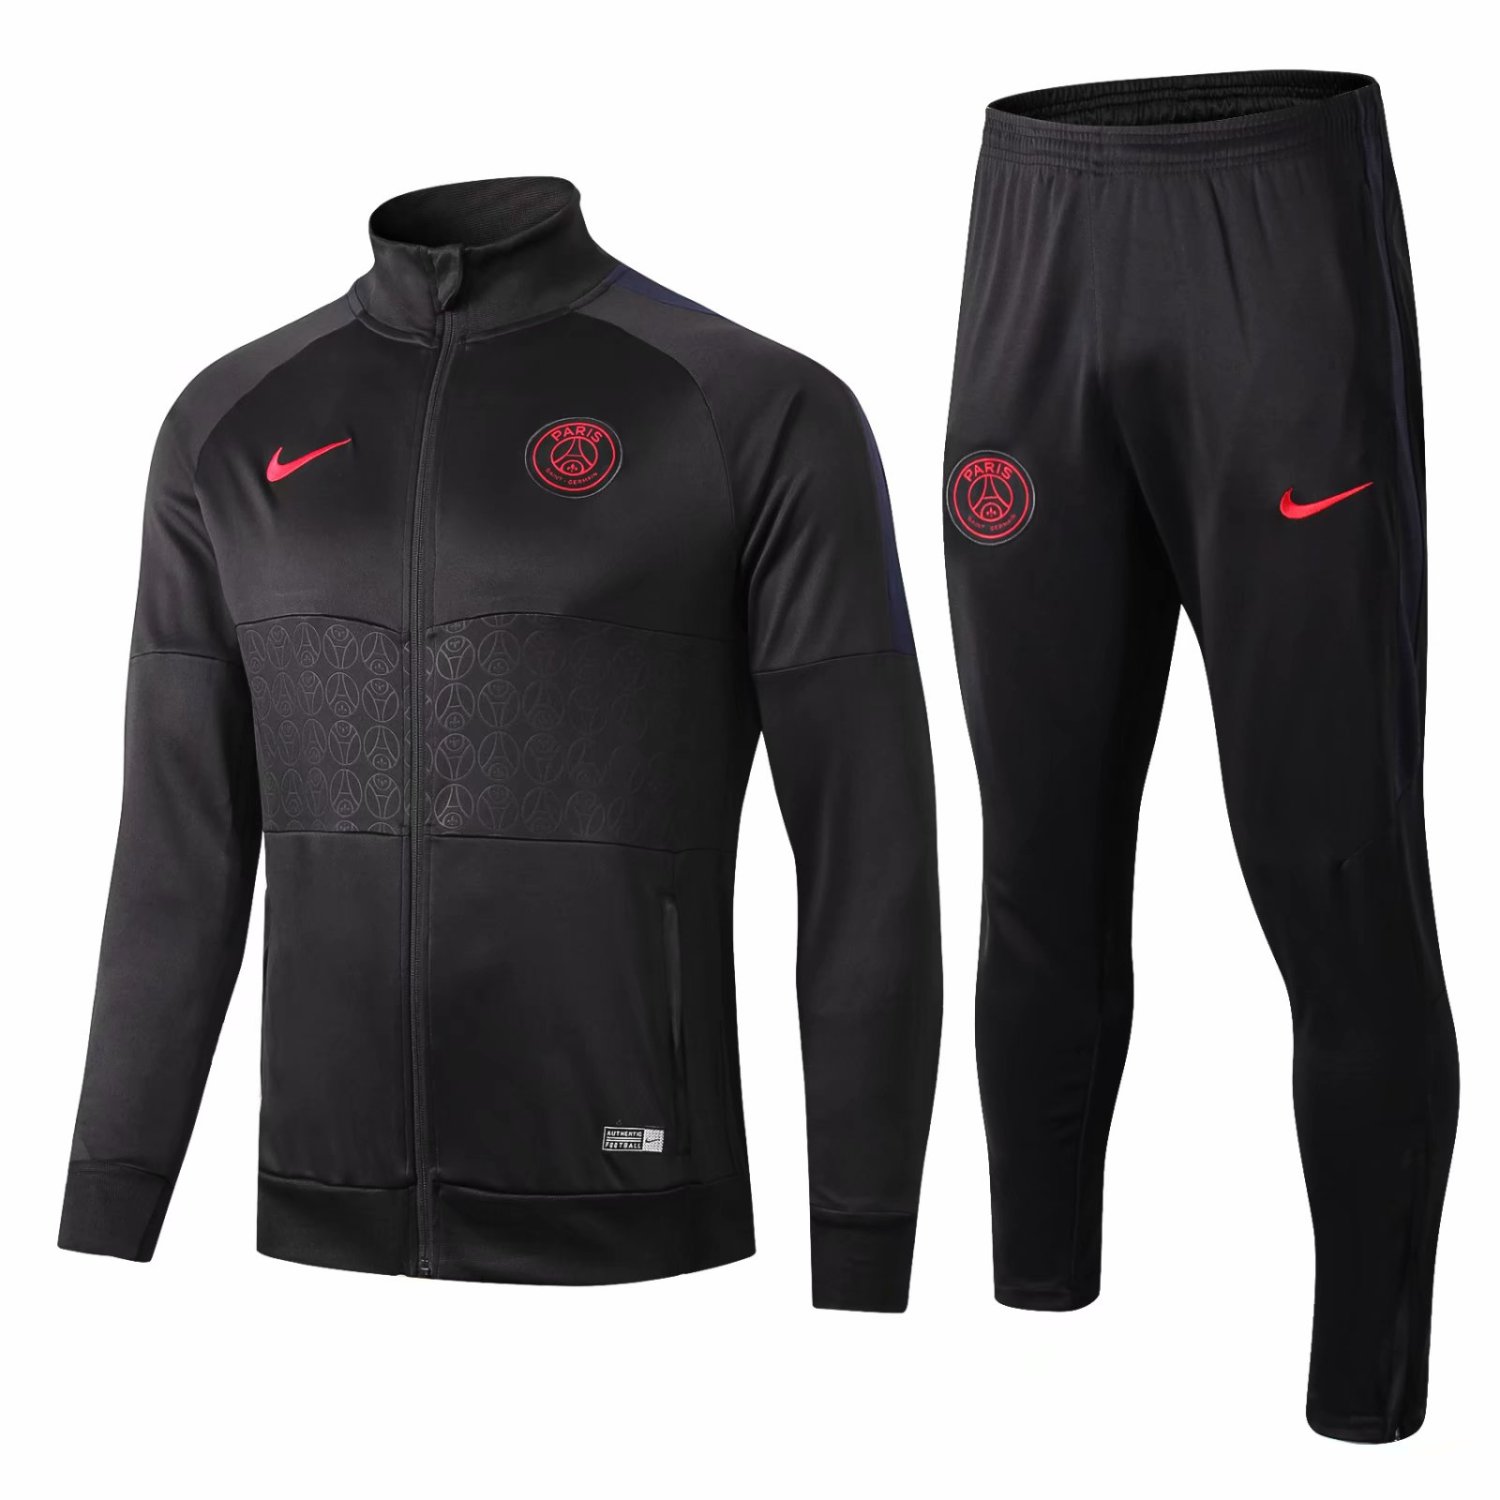 US$ 38.80 - PSG Jacket + Pants Training Suit High Neck Dark Grey 2019/ ...